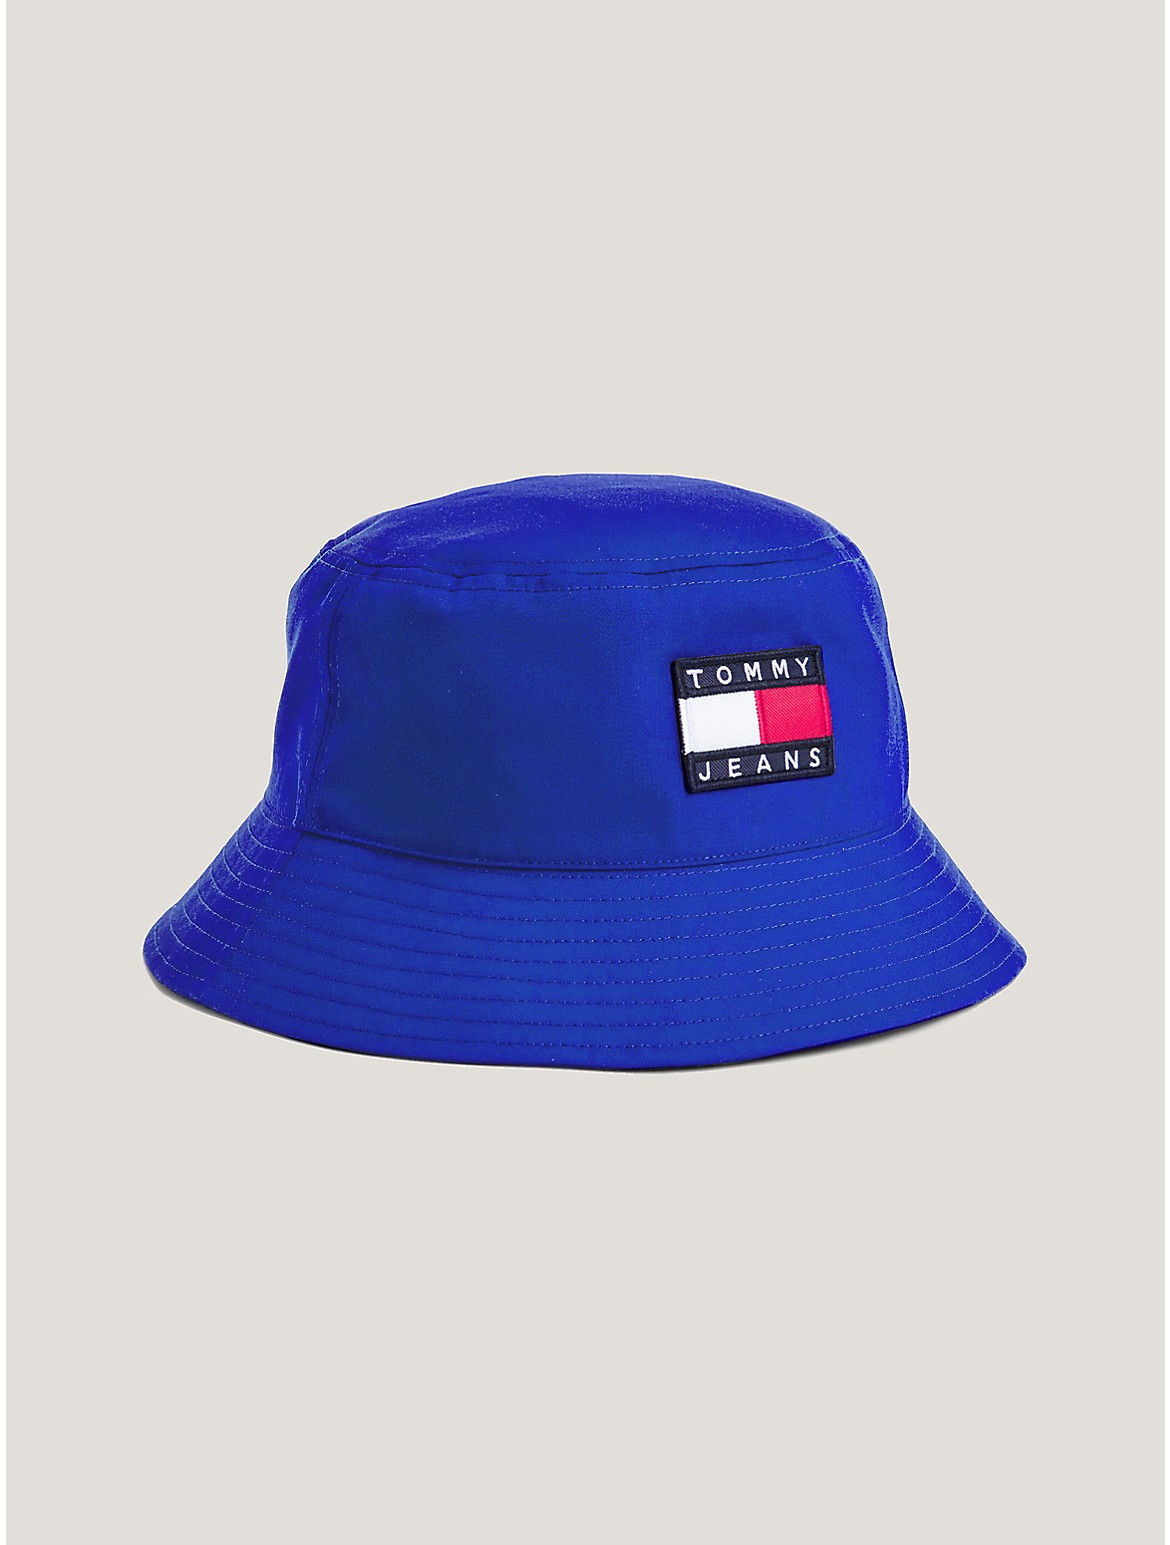 Tommy Hilfiger Men's Heritage Bucket Hat - Blue